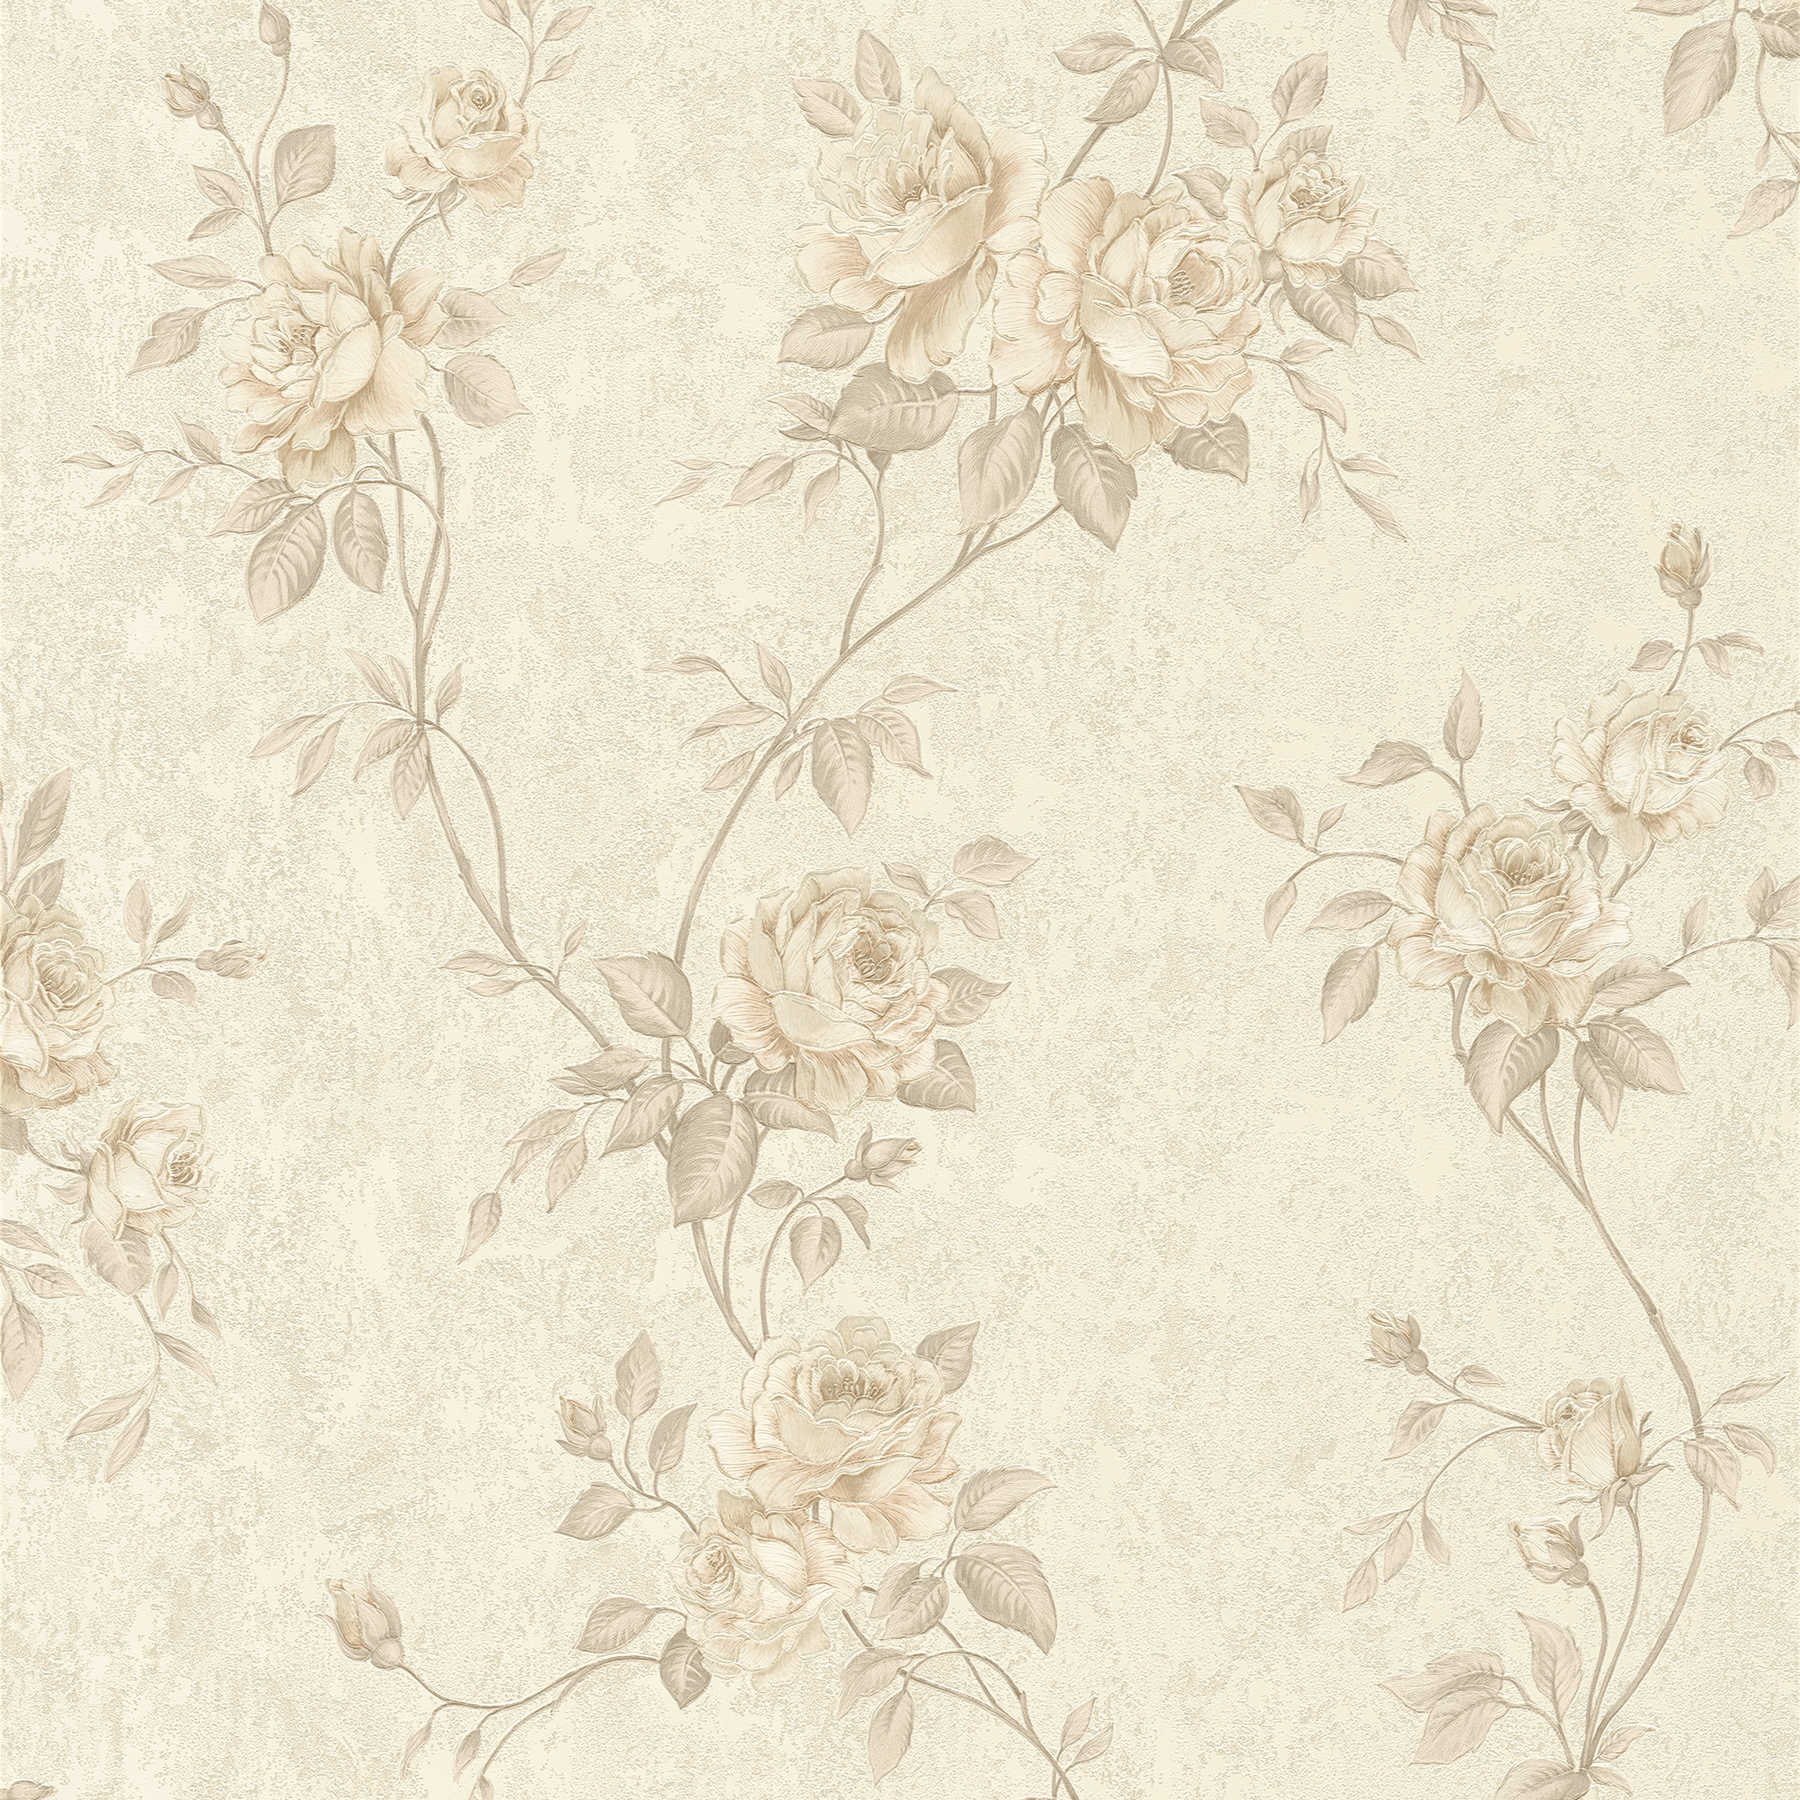 Romantic roses wallpaper with flowers vines - beige, brown, cream
